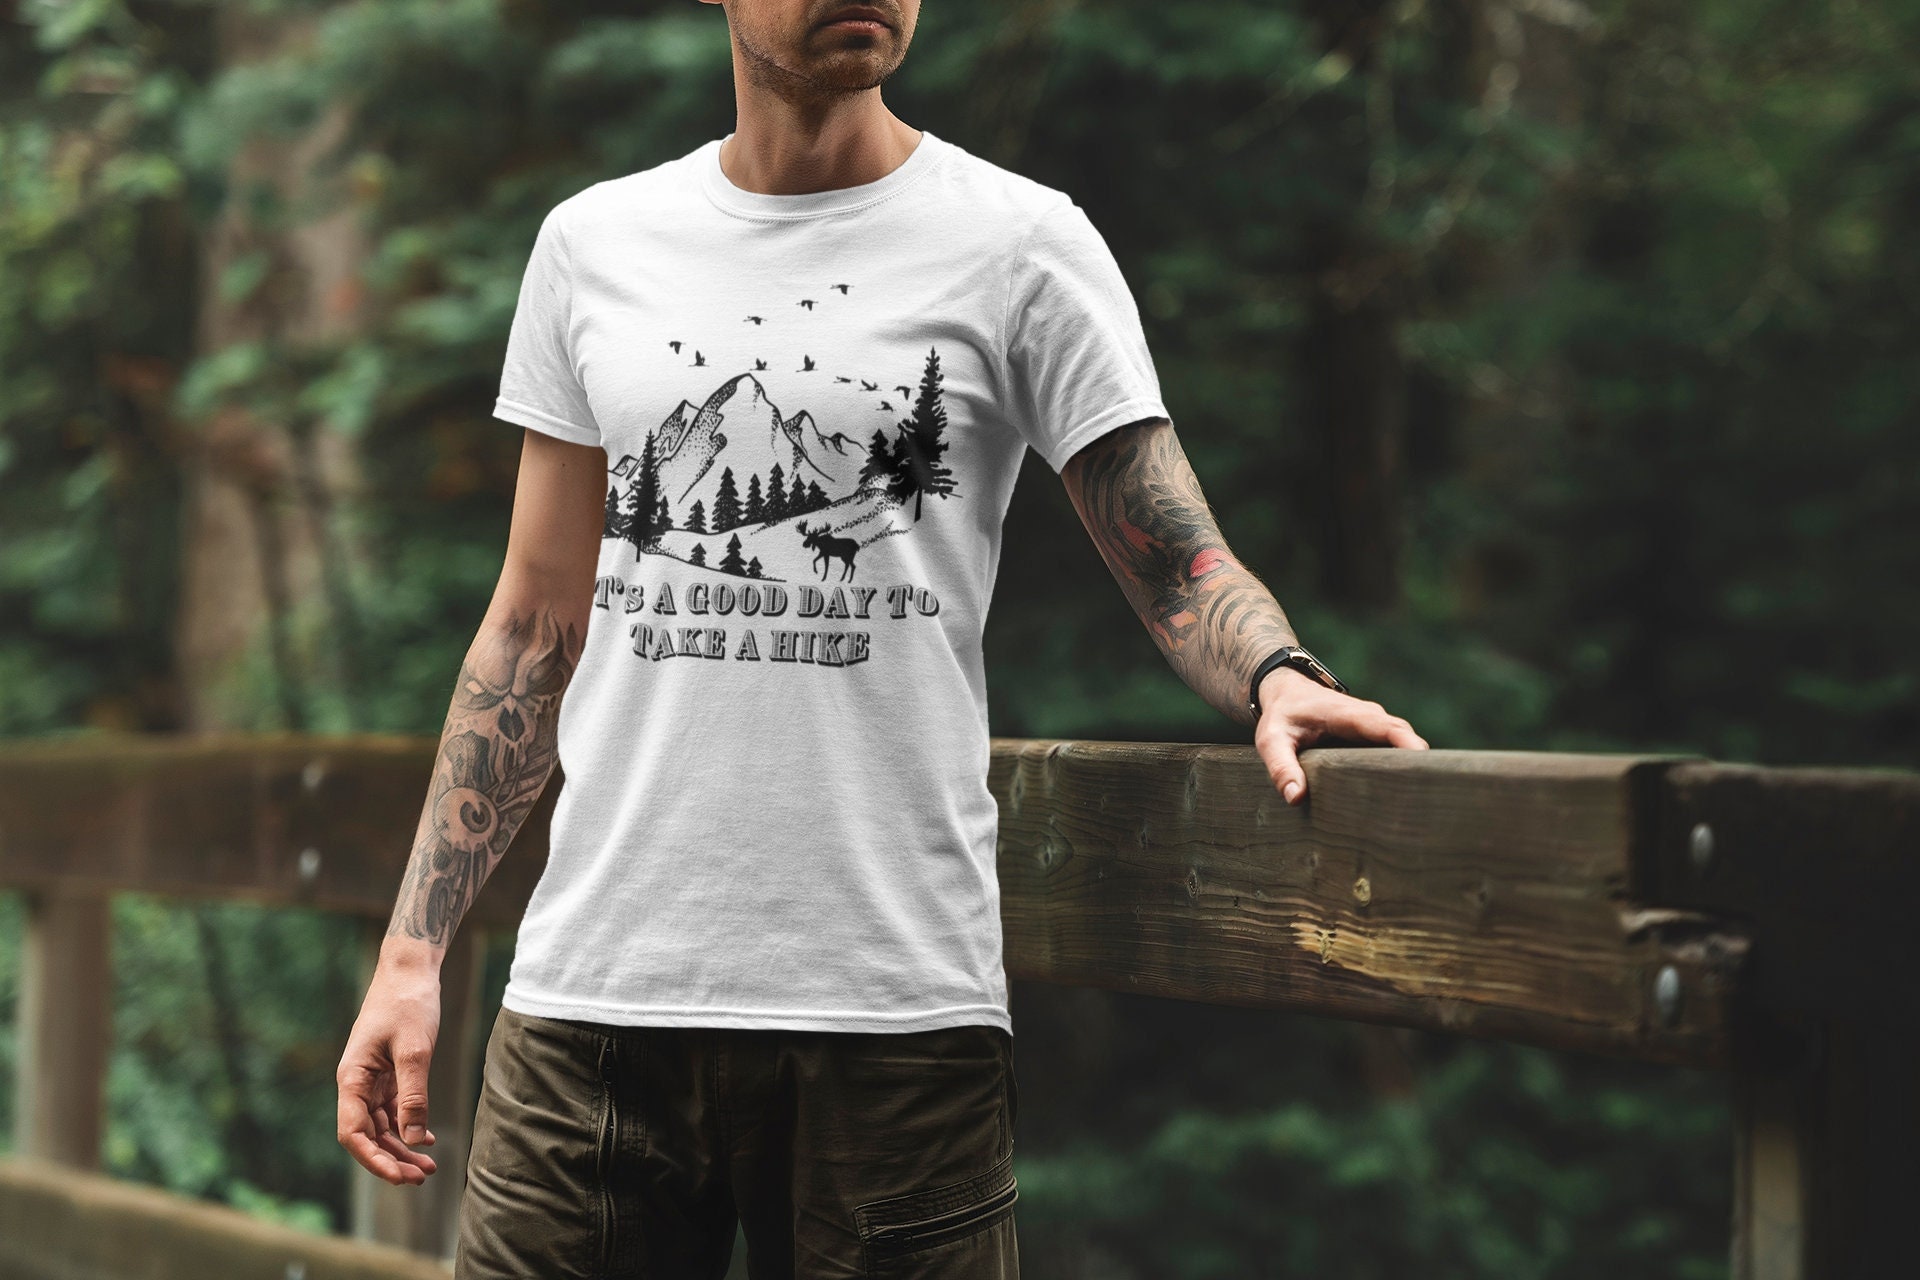 Mountain Printed T Shirts